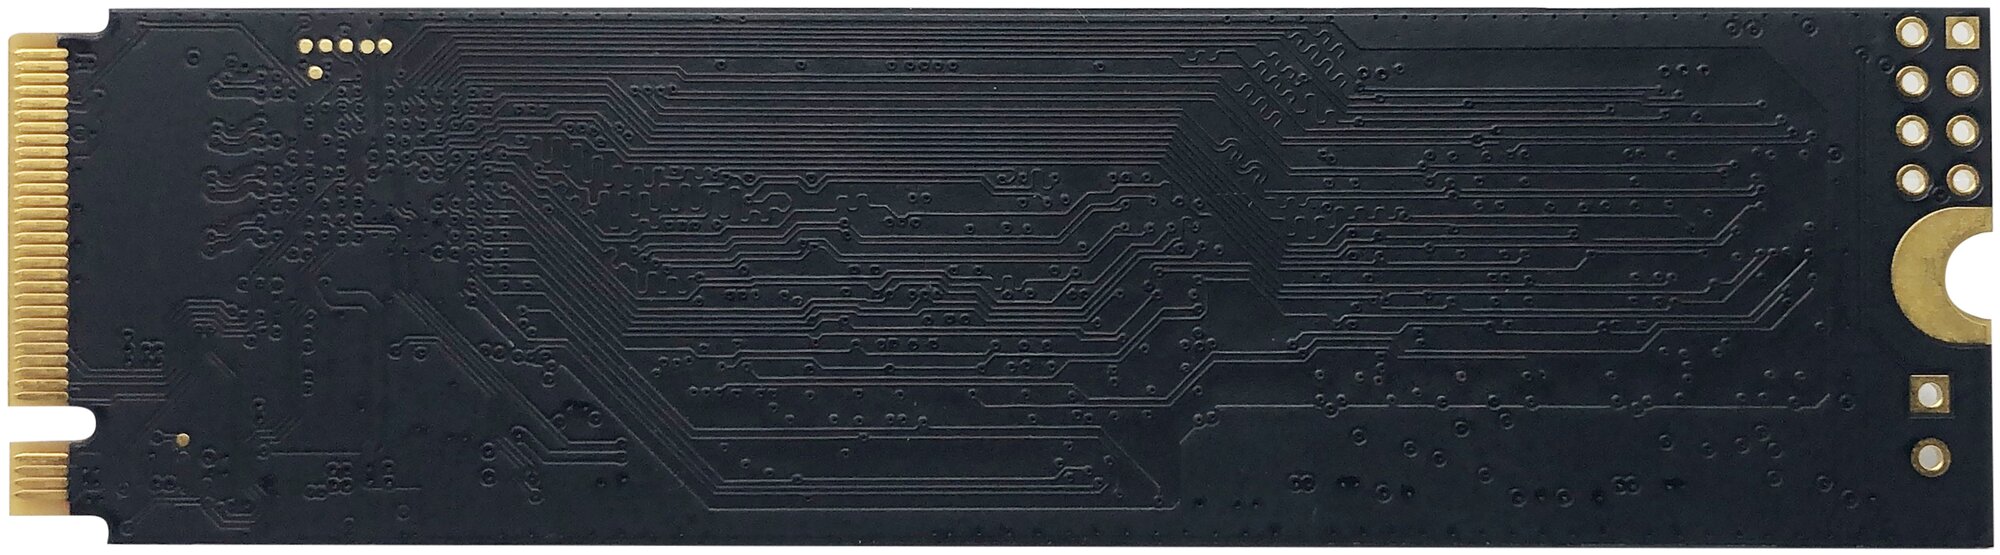 SSD диск PATRIOT MEMORY PATRIOT P300 M.2 2280 512Гб PCI-E 3.0x4 NVMe NAND 3D (P300P512GM28) - фотография № 2